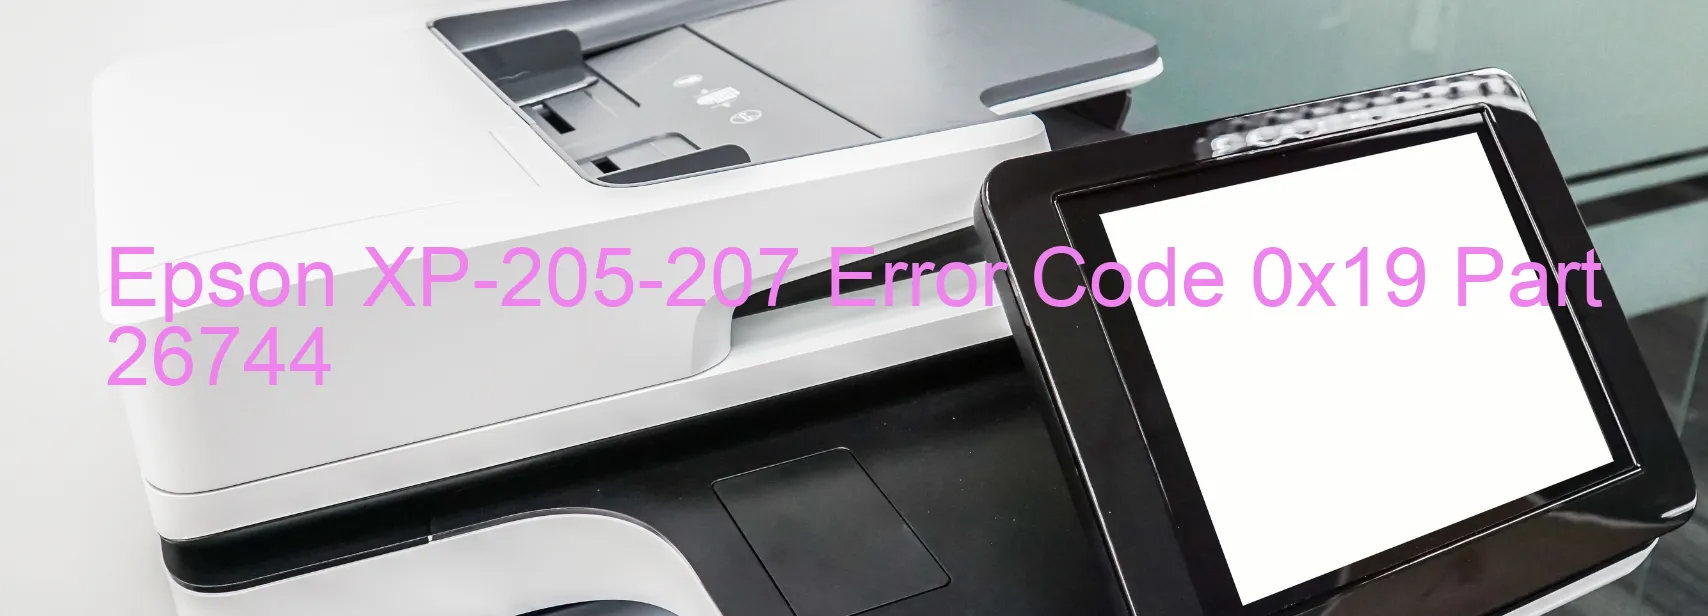 Epson XP-205-207 Error Code 0x19 Part 26744